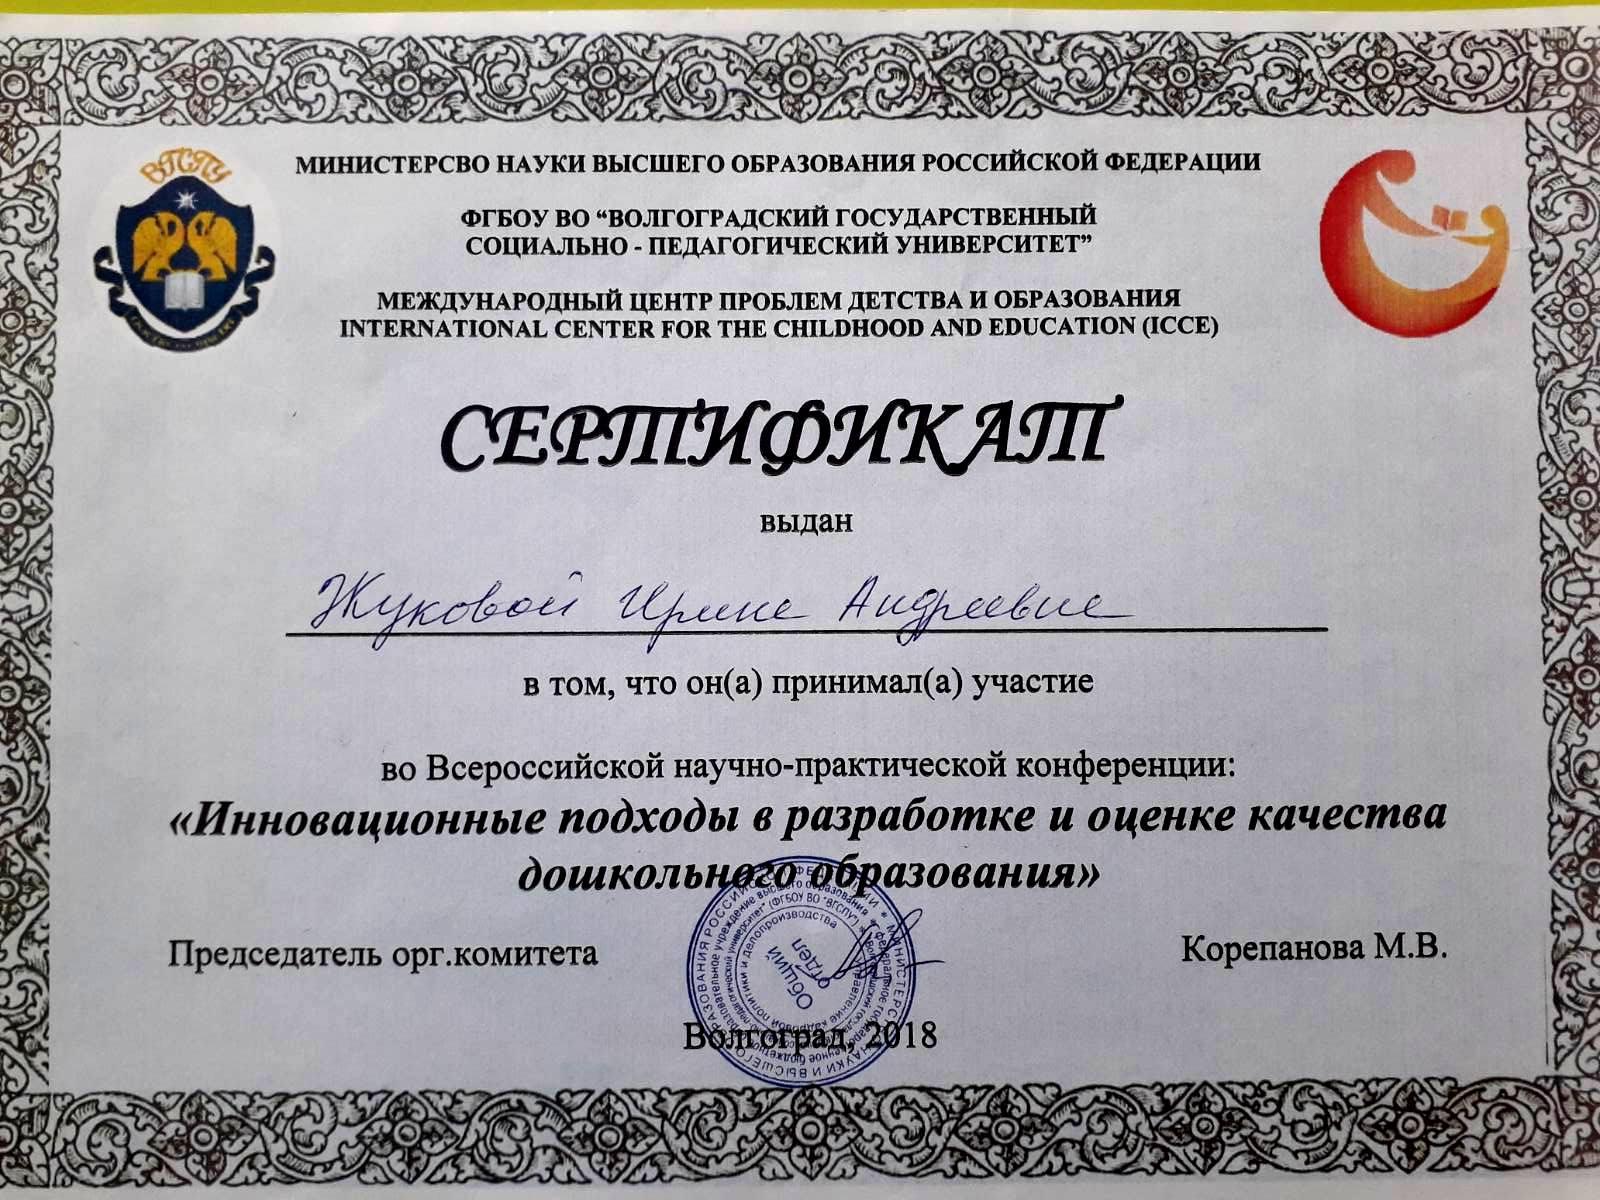 Сертификат3.jpg